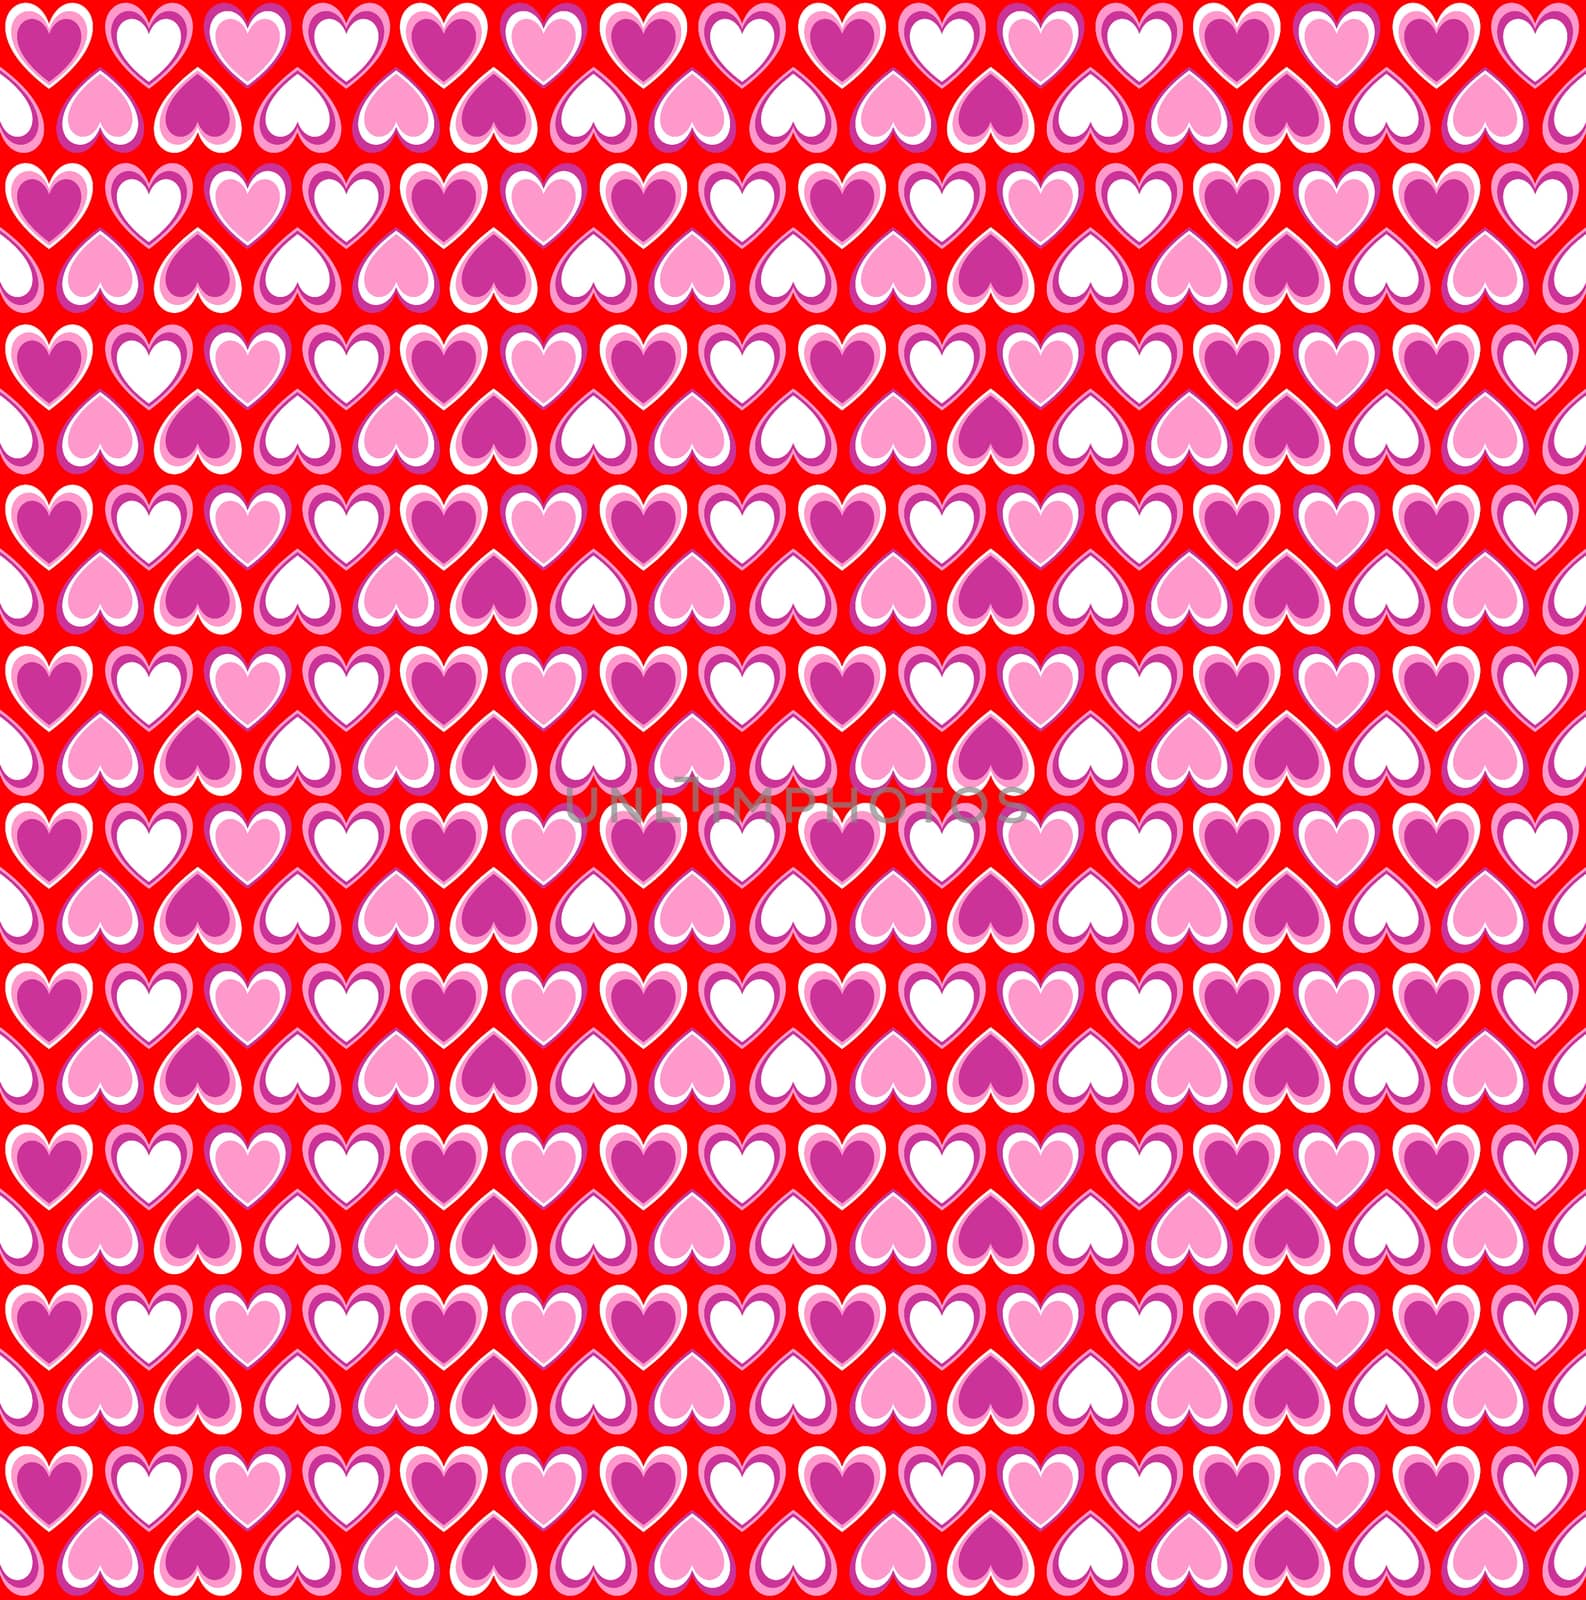 Hearts seamless pattern by Elenaphotos21